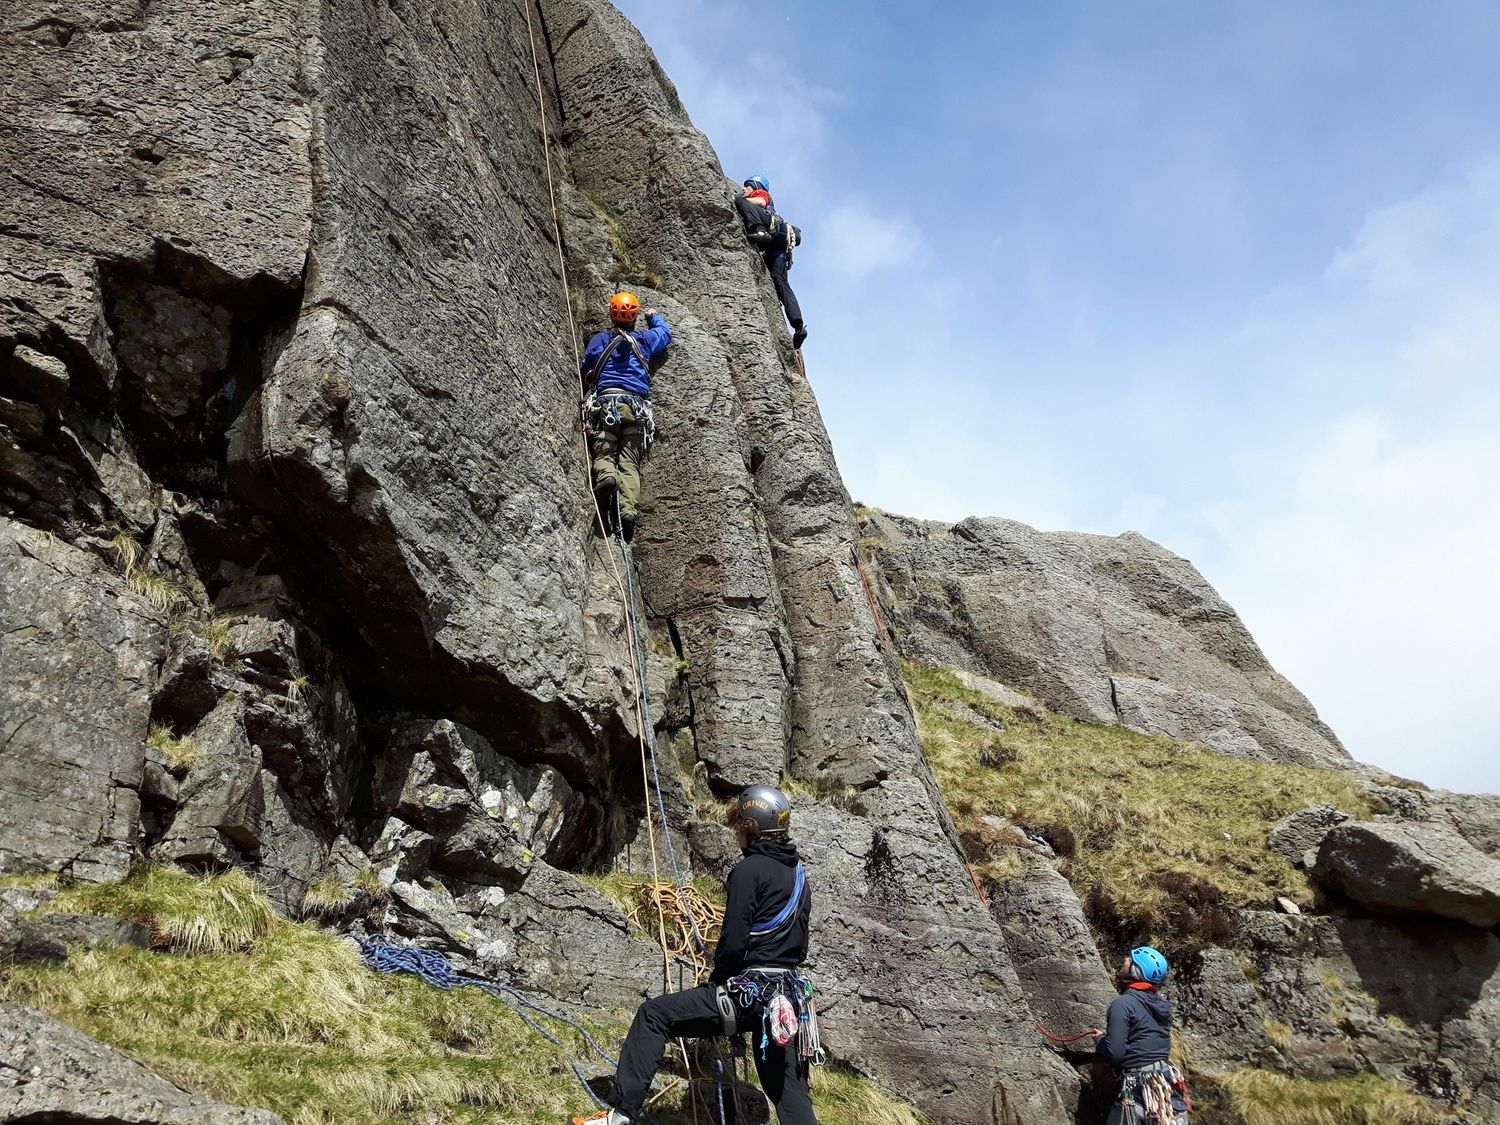  Lead climbing on a Rock Climbing Instructor course - Chris Ensoll Mountain Guide 